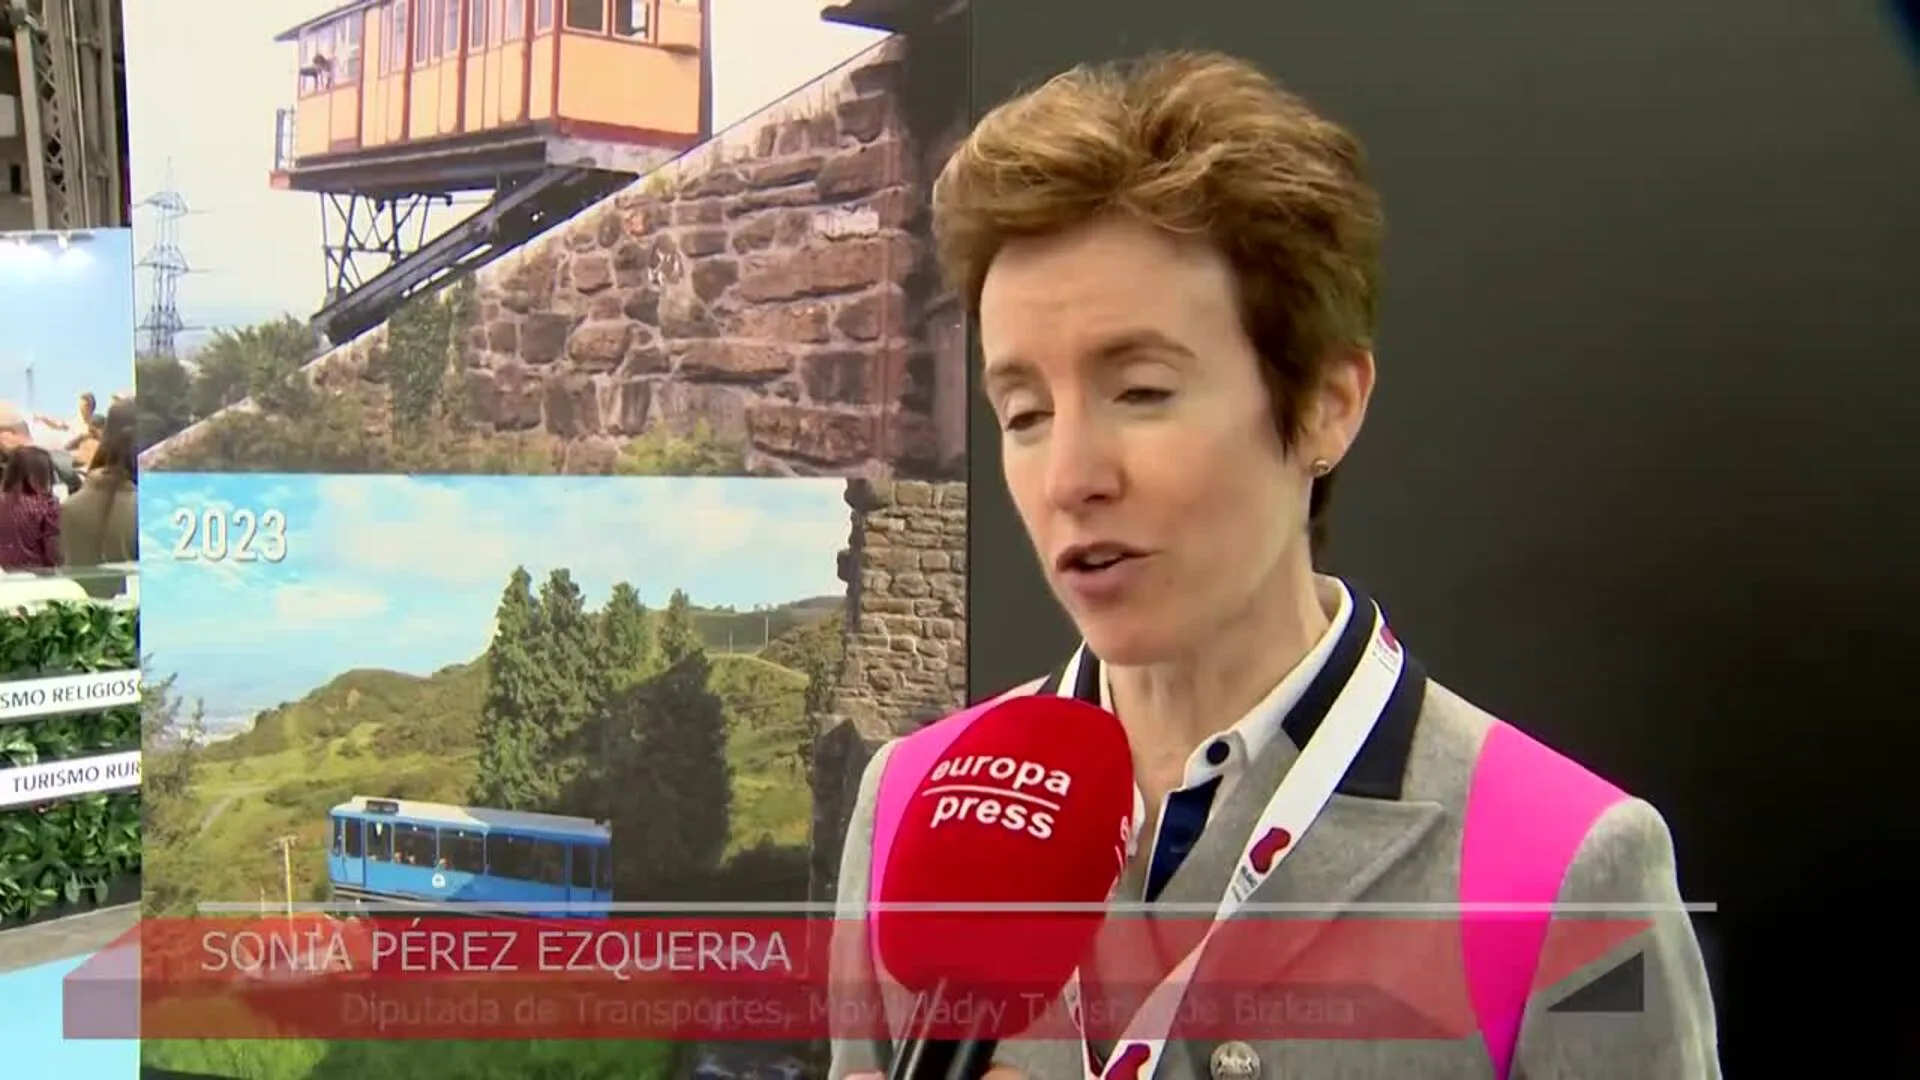 Bizkaia da un nuevo impulso al turismo industrial en su territorio con 'Iron River'